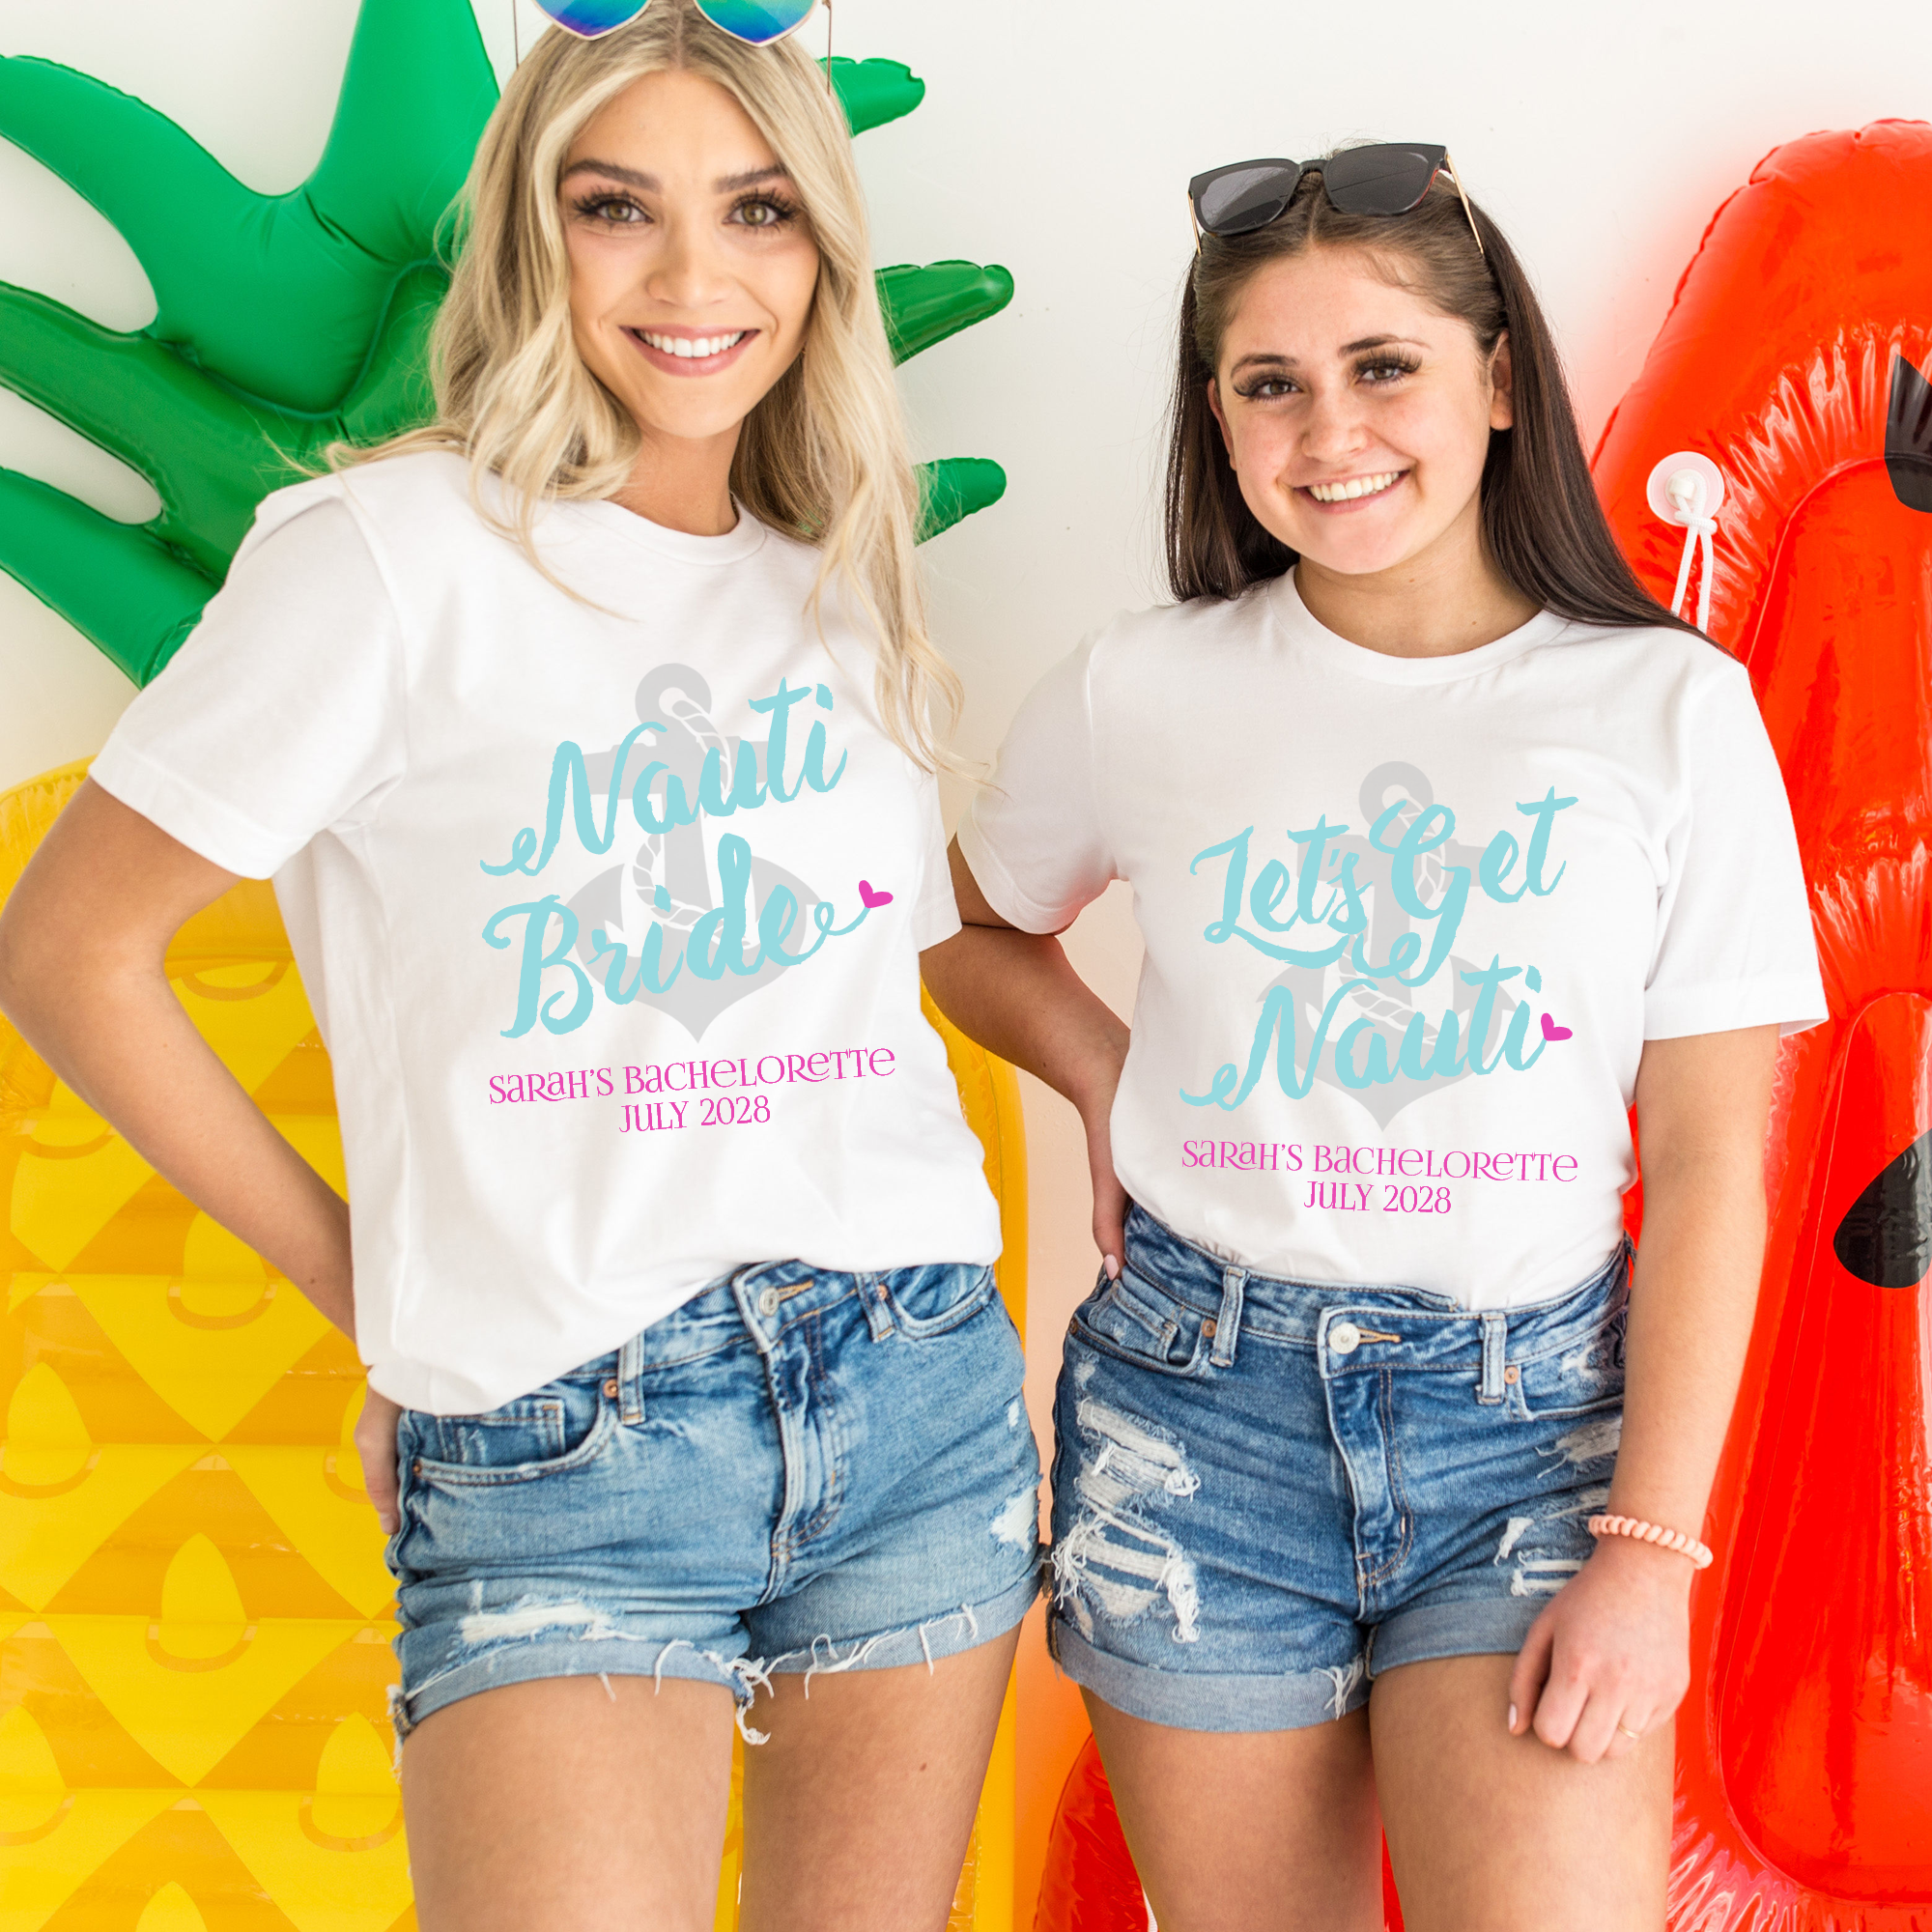 Bachelorette Party T-Shirts | Bachelorette Cruise | Let's Get Nauti